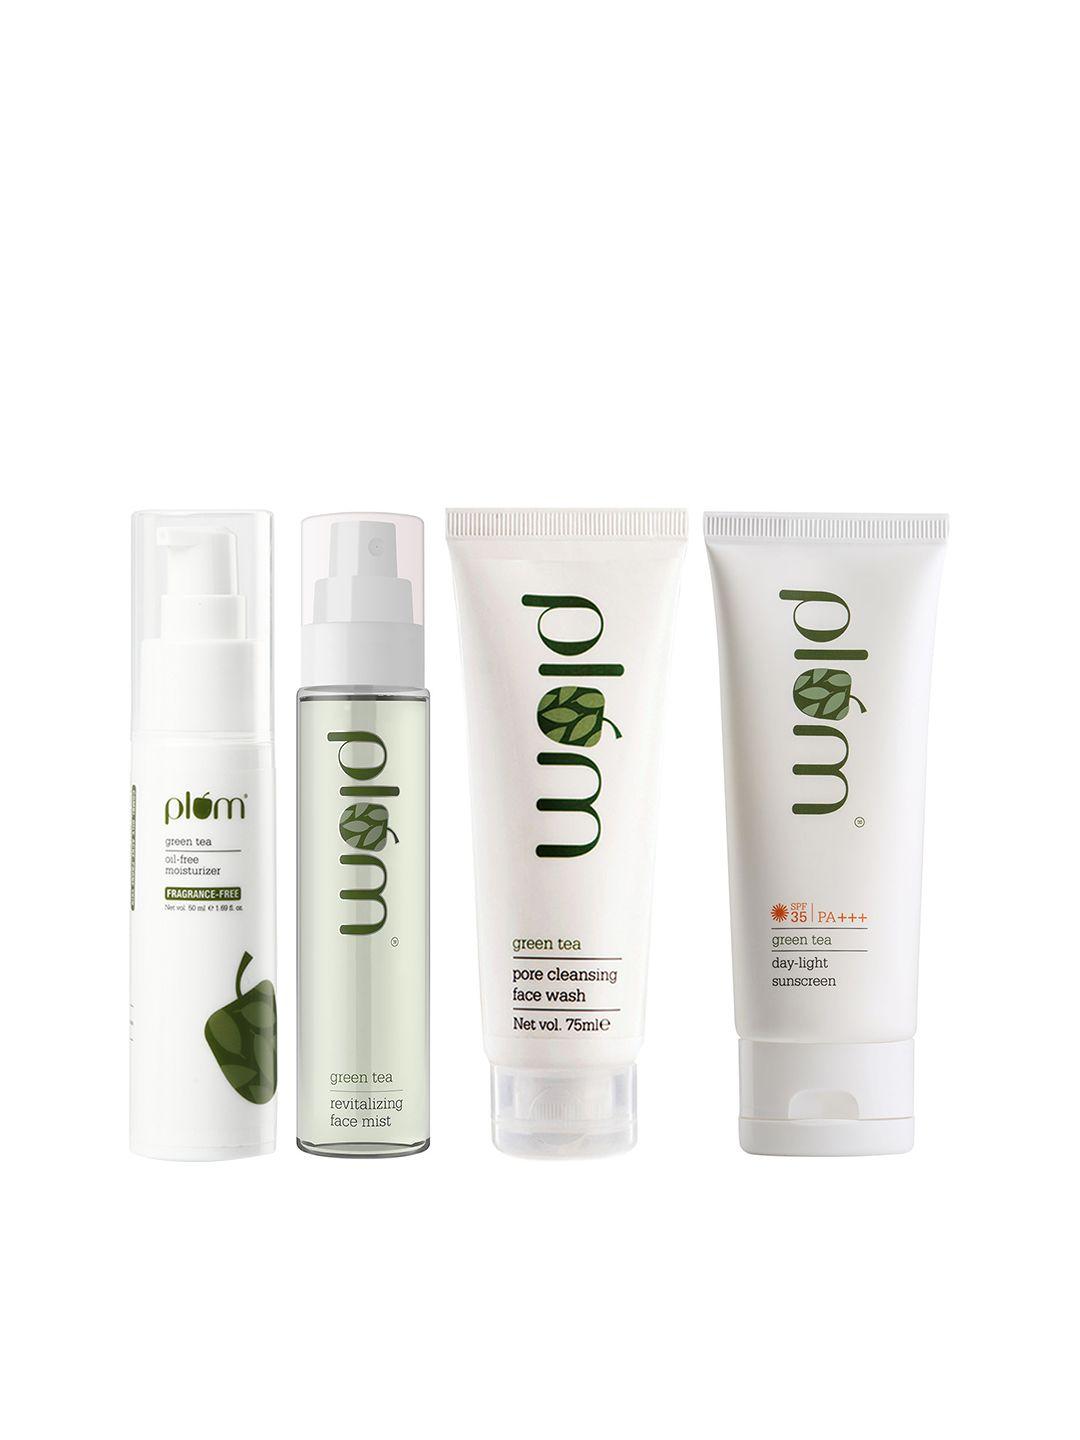 plum set of moisturizer-sunscreen-face mist & face wash